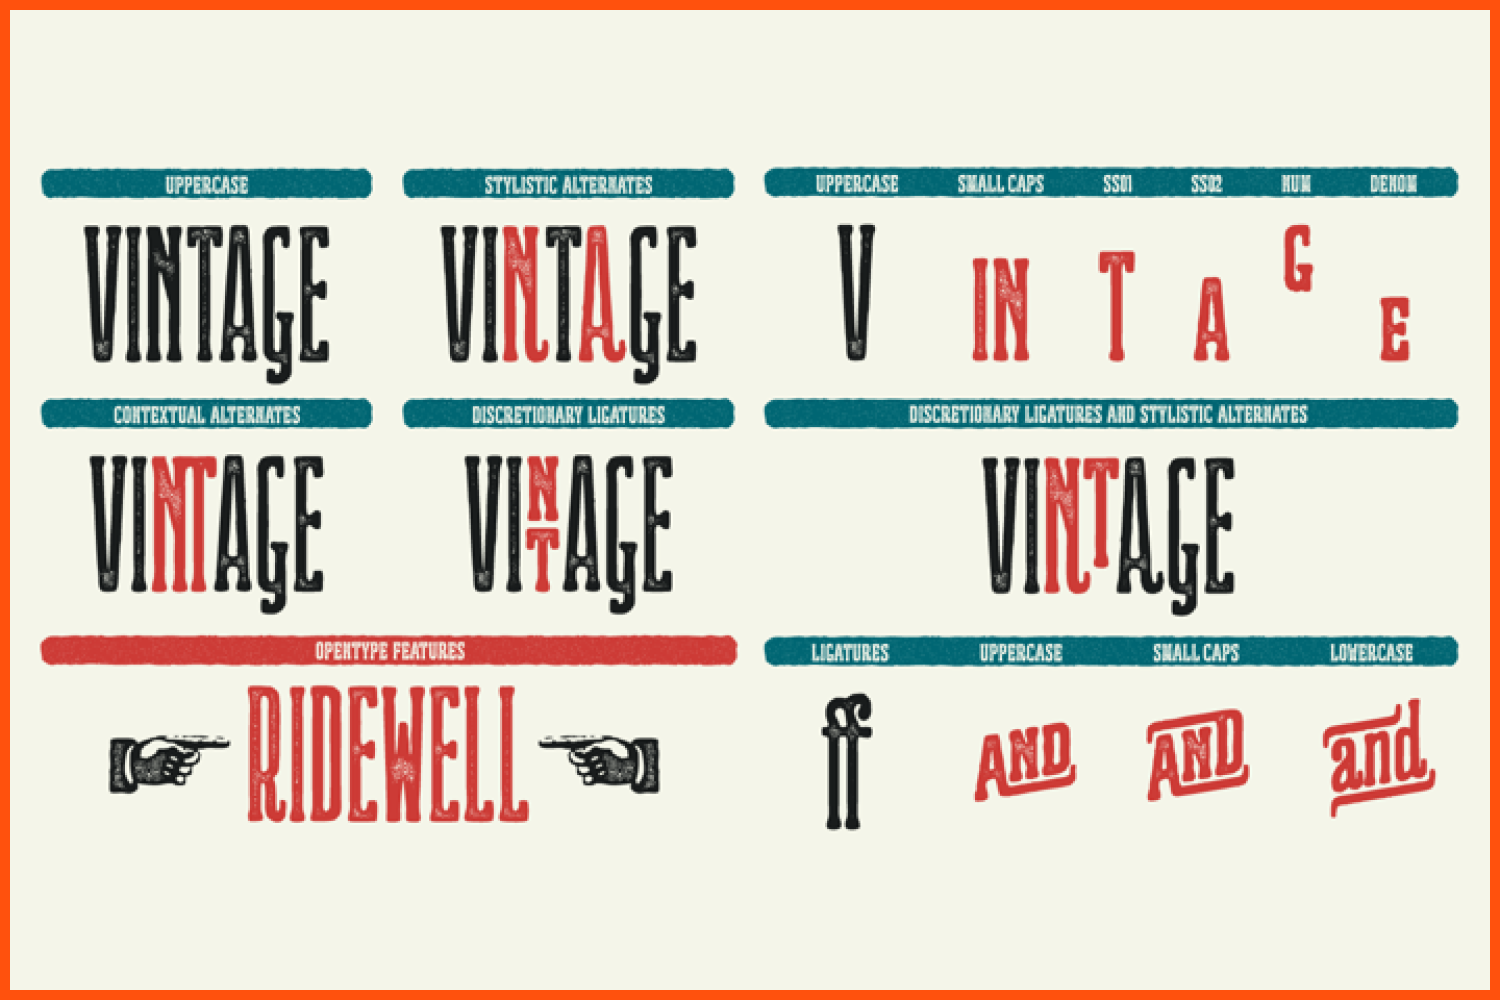 Ridewell typeface.